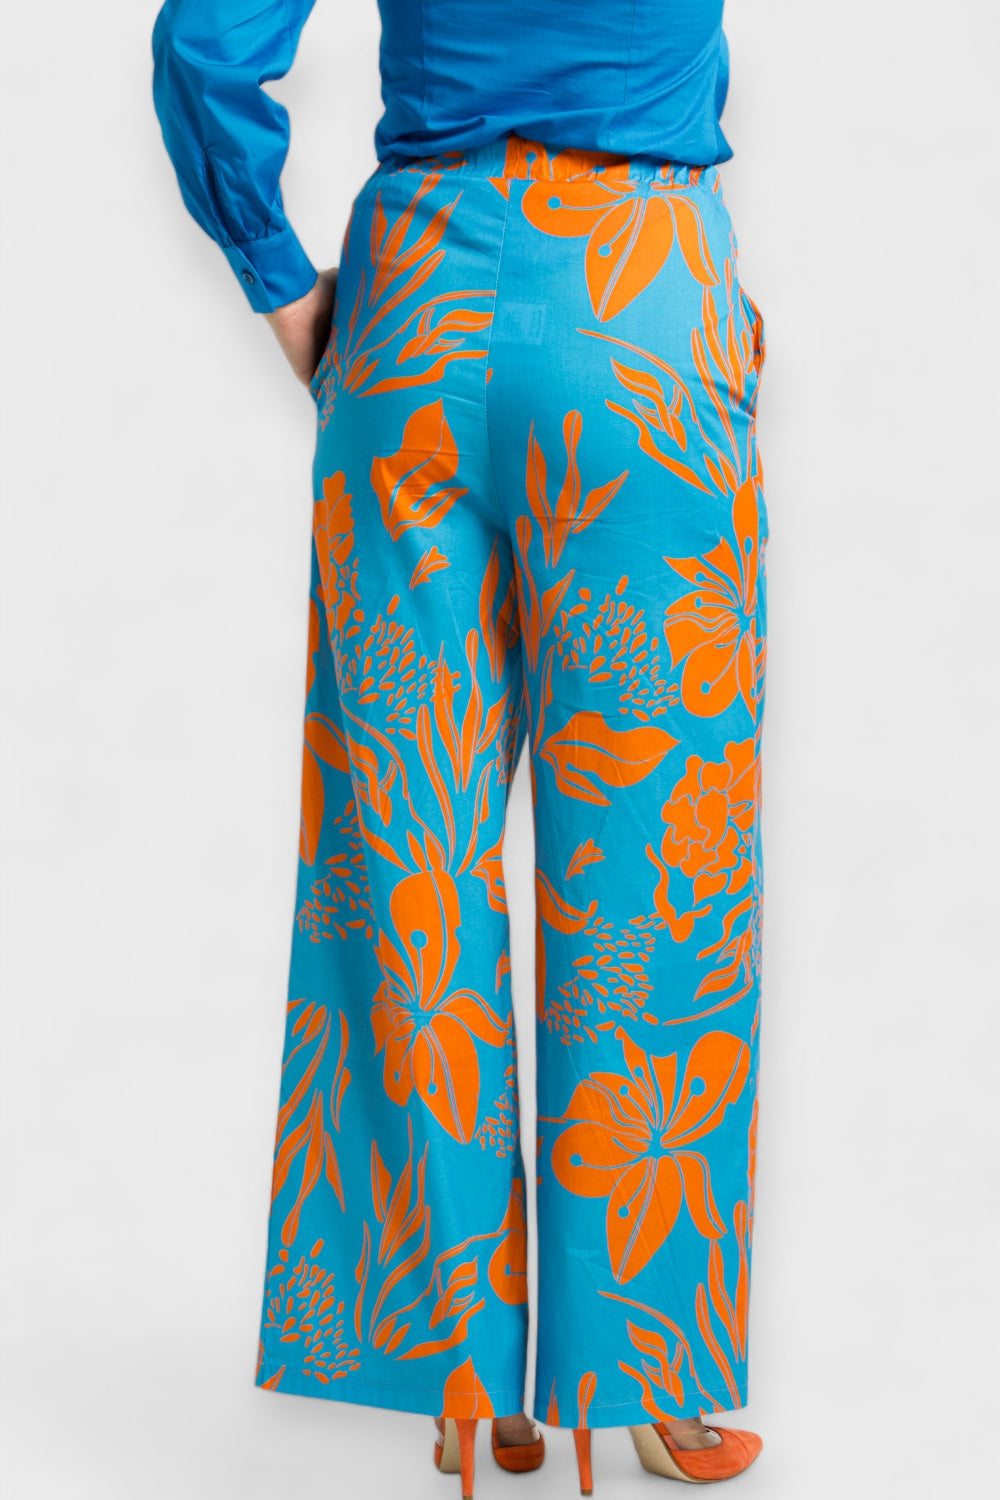 Capri Blue & Orange Floral Cotton Palazzo Pants by Enhle Italian Women's Clothing